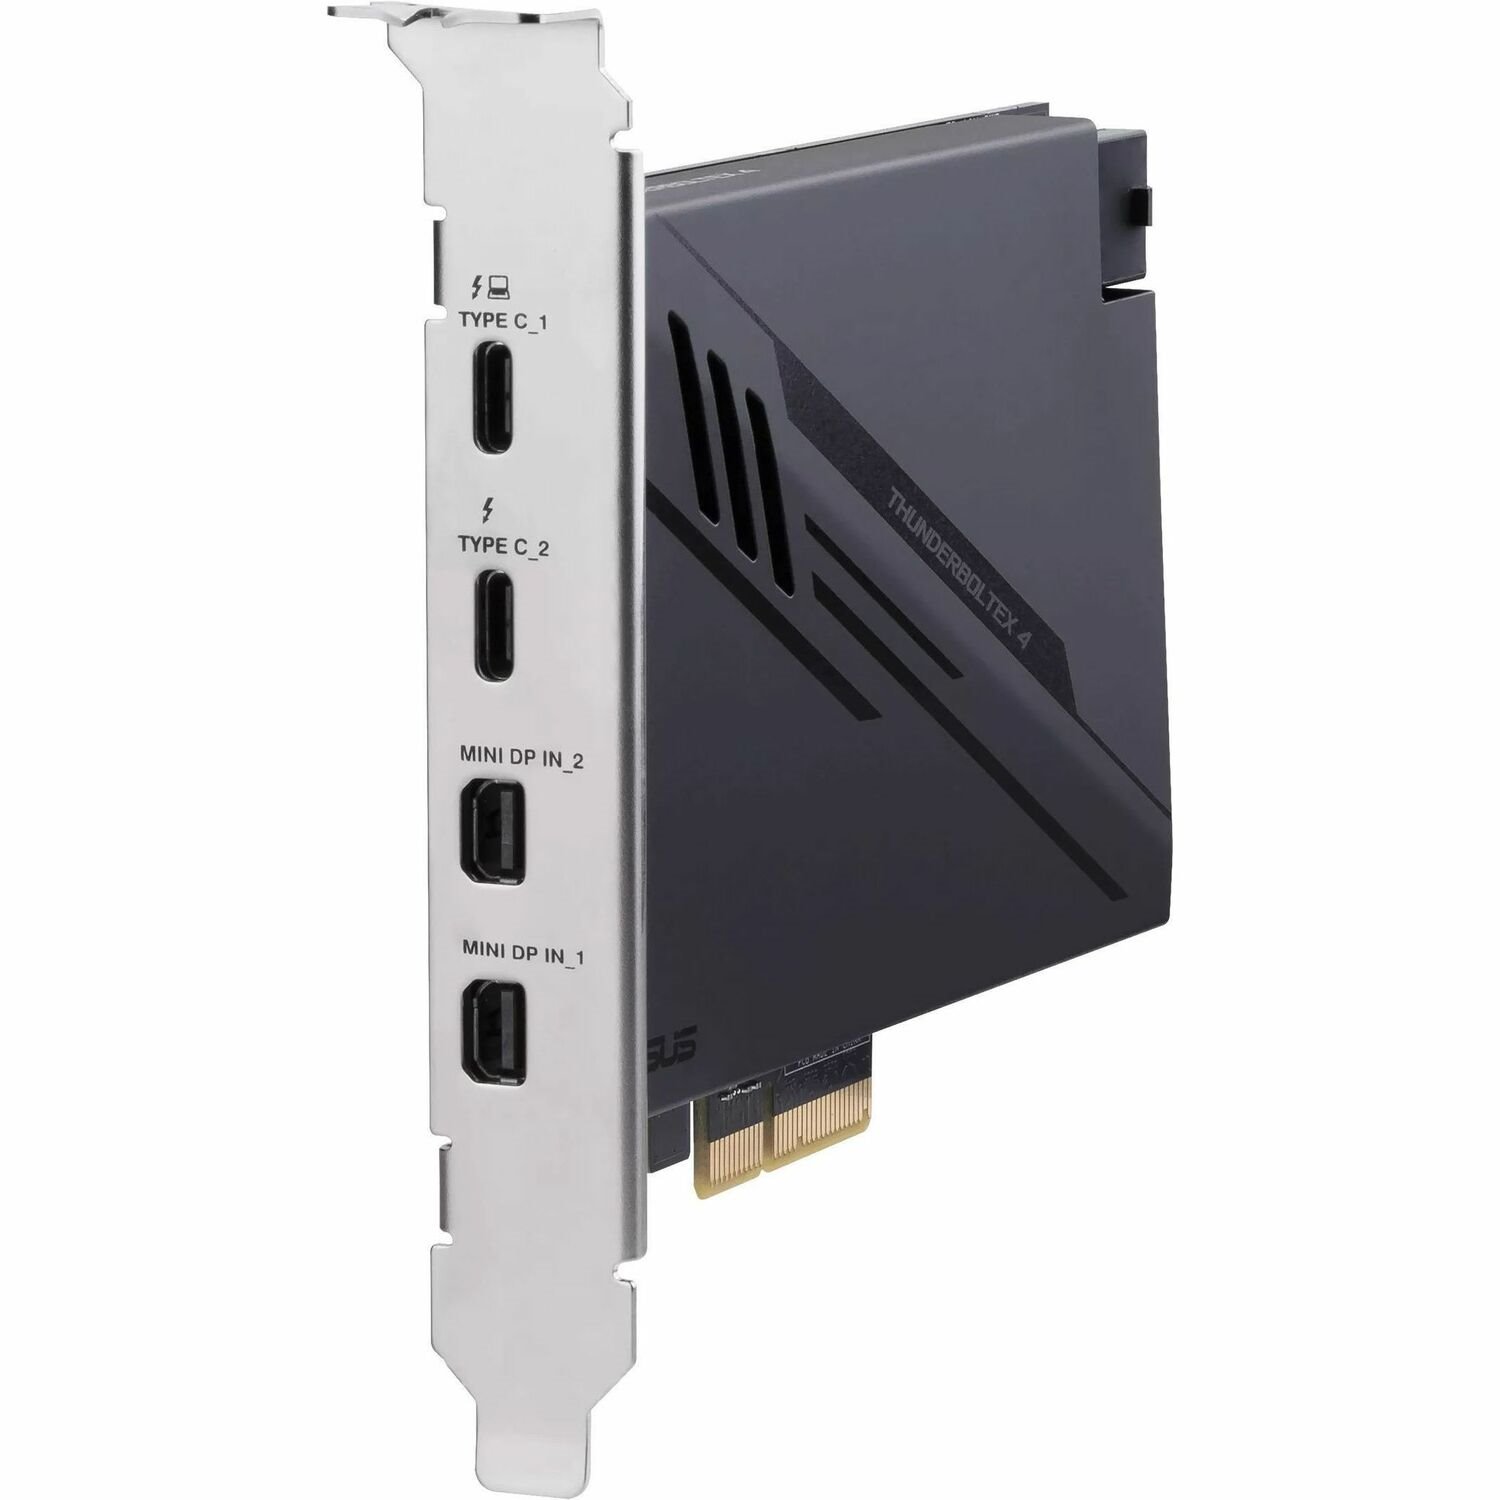 Asus ThunderboltEX 4 Thunderbolt Adapter - PCI Express 3.0 x4 - 5 GB/s - Monitor, Notebook